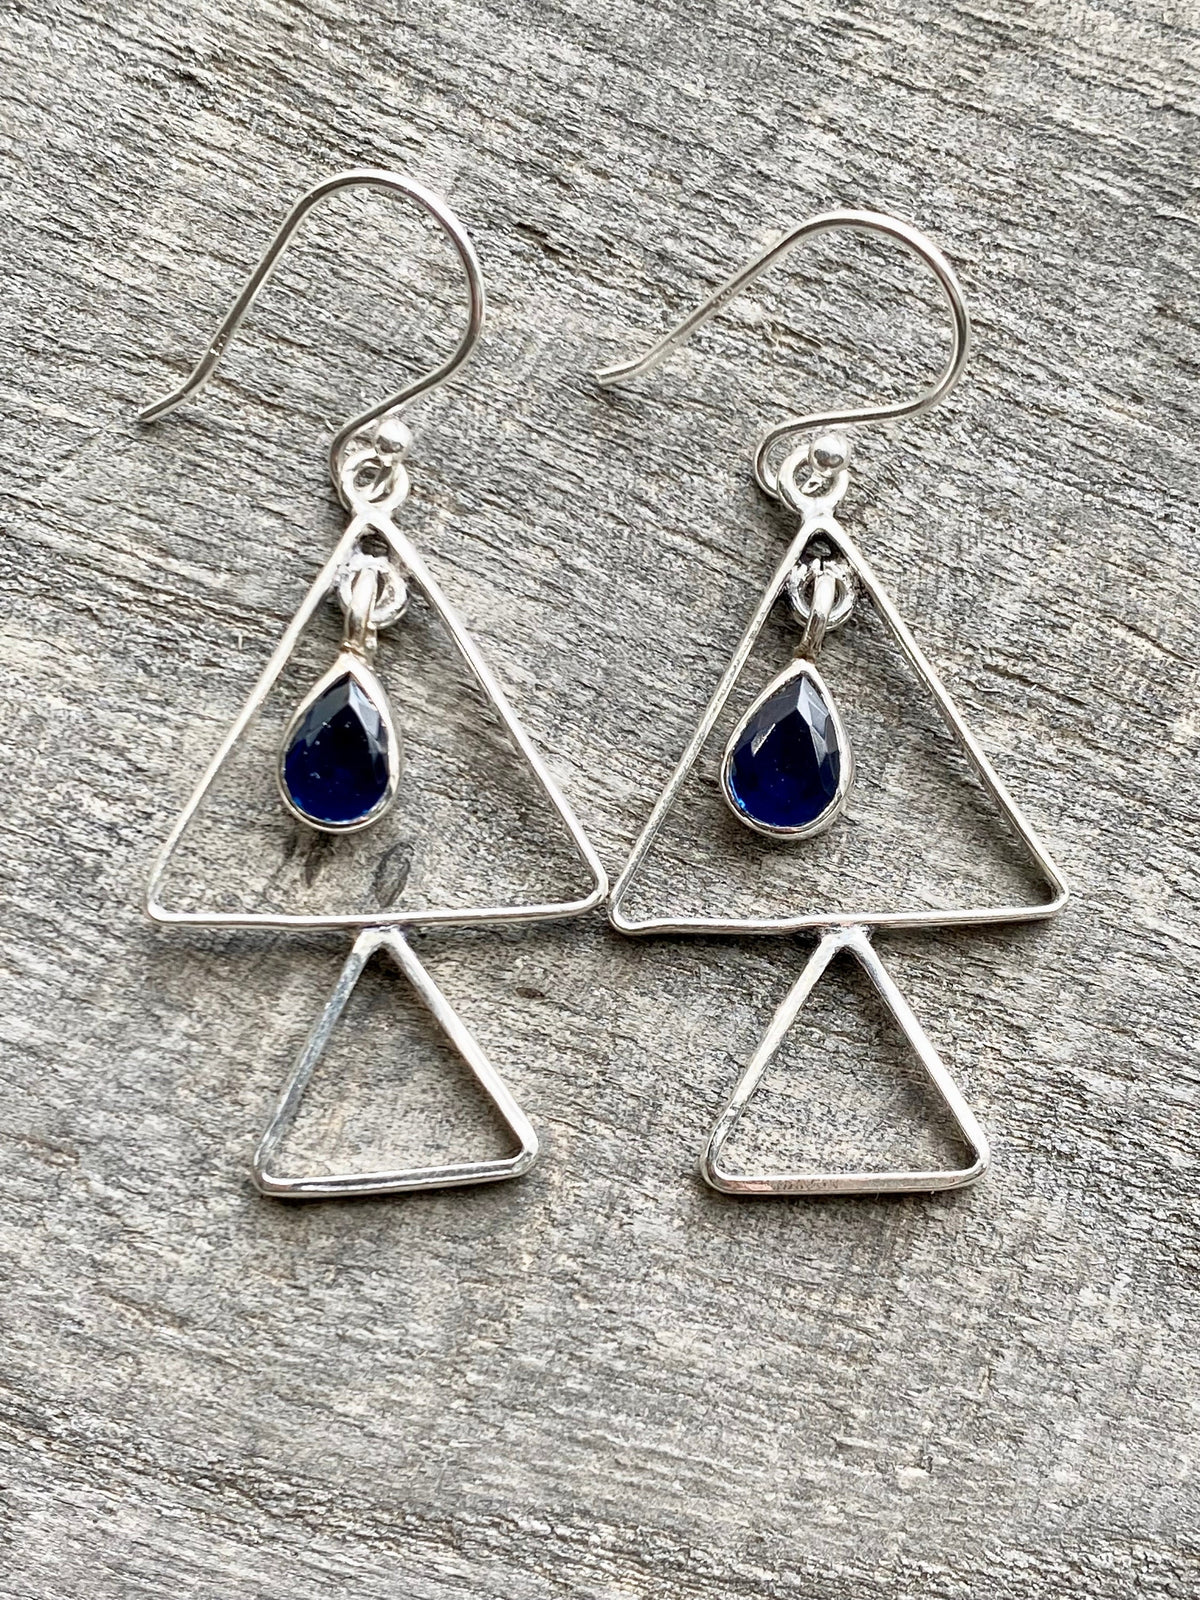 Sapphire Triangle 925 Silver Handmade Earrings - Crystal Healing Meditation